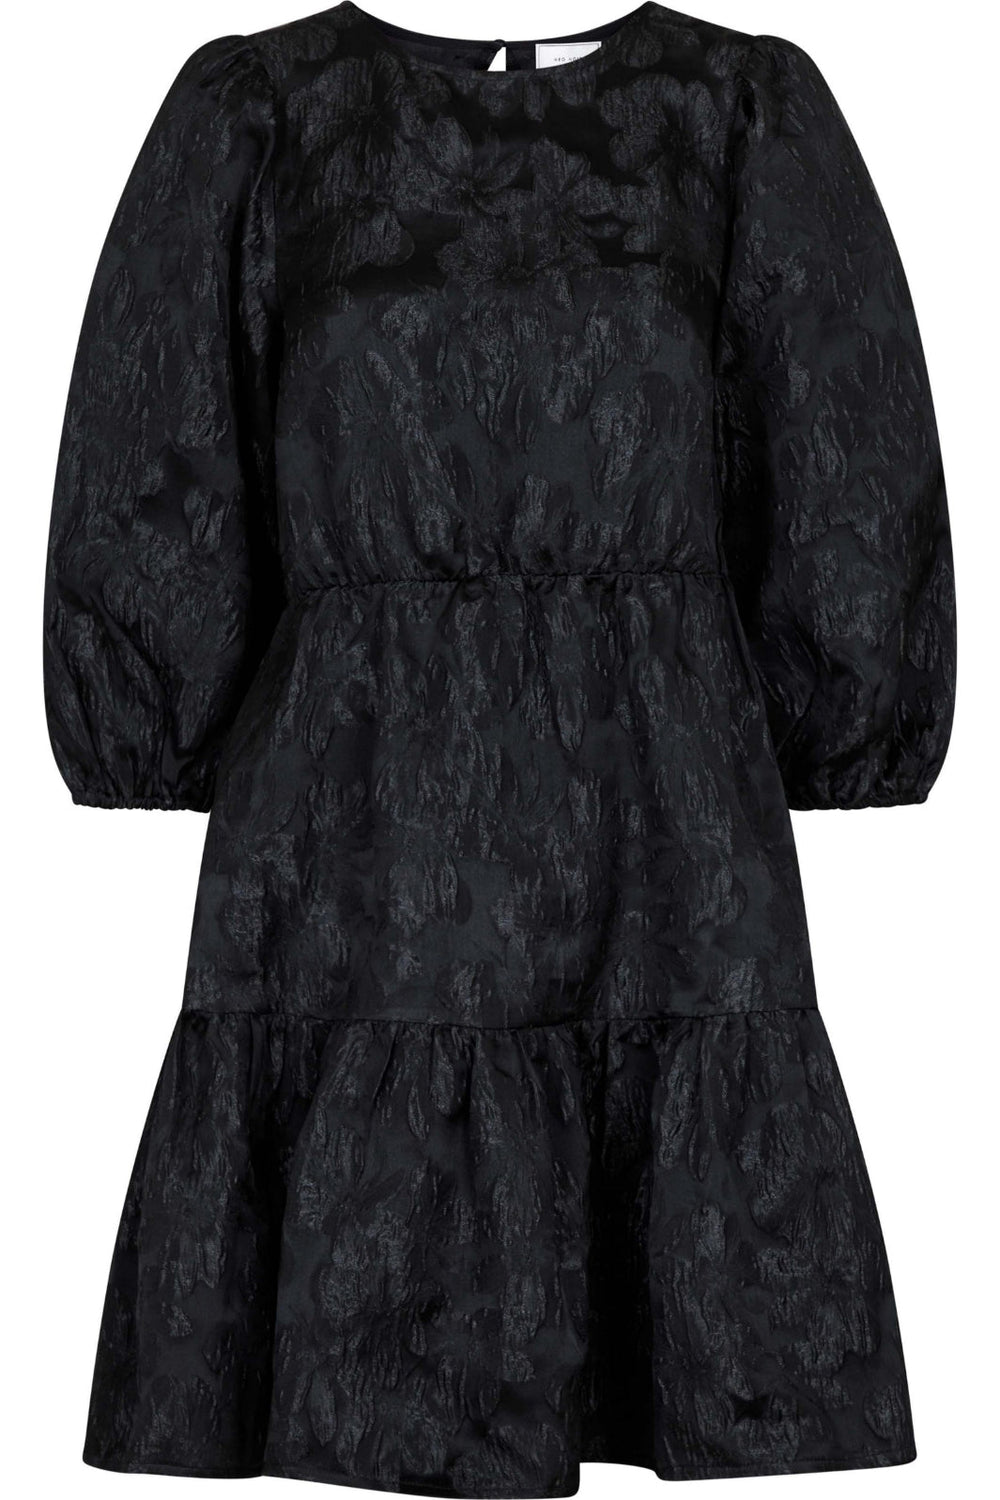 Neo Noir - Dayana Glitzy Flower Dress - Black Kjoler 